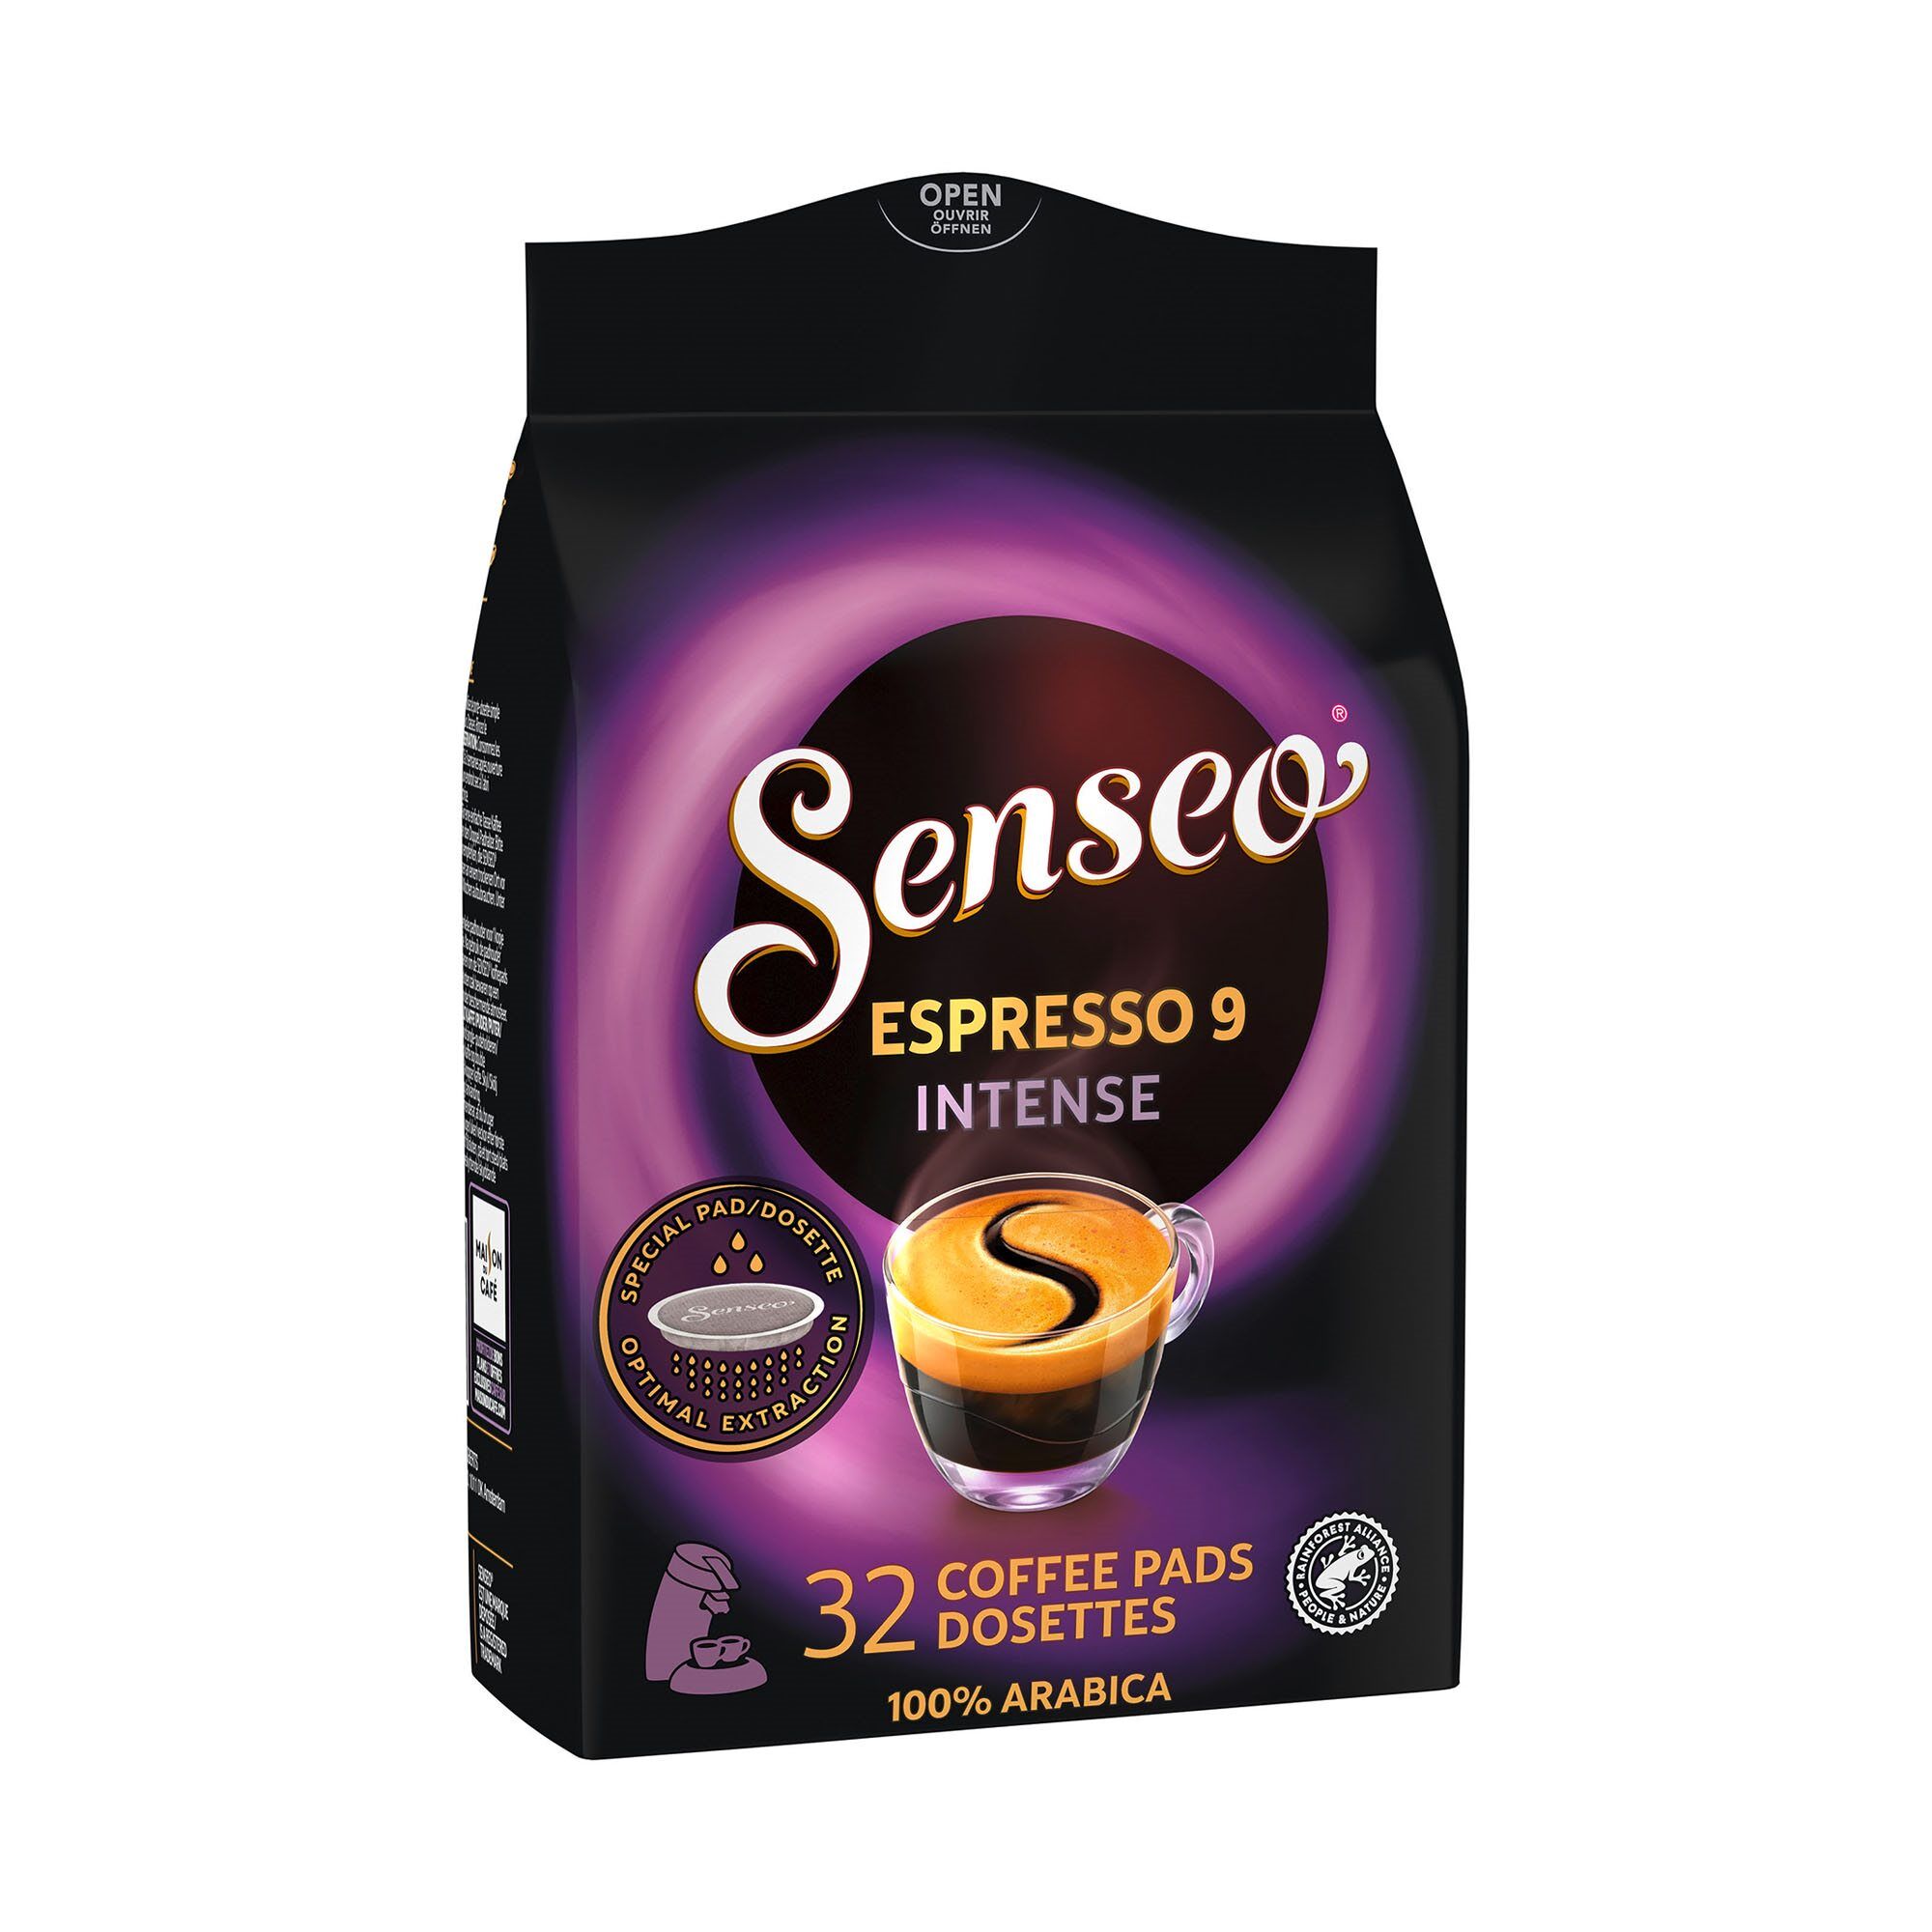 Dosettes de café Senseo Espresso Intense - Paquet de 32